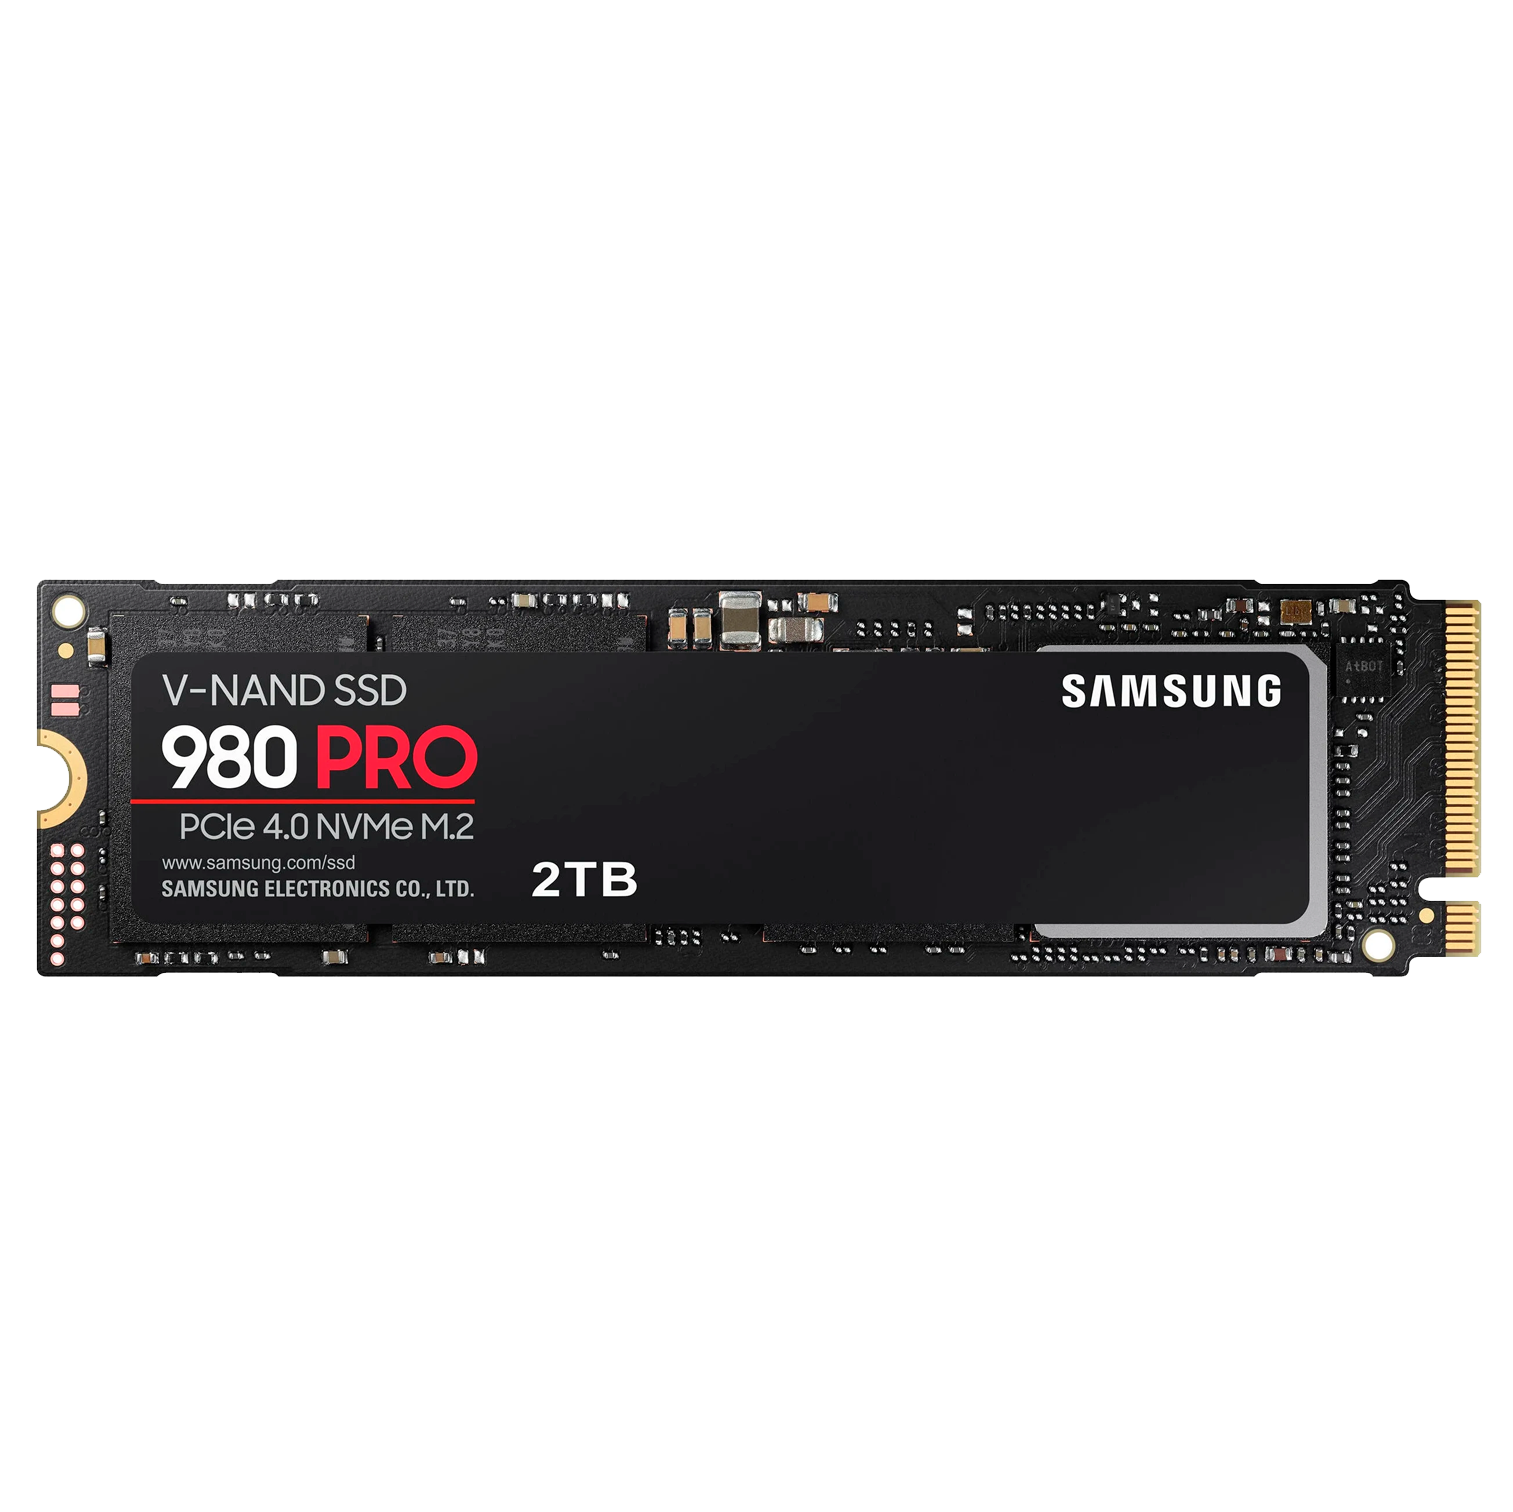 Ssd накопитель samsung 980 m 2 2280. SSD m2 Samsung. Samsung SSD 970 EVO Plus 500gb. SSD Samsung 980 Pro 2tb. Samsung m.2 970 EVO Plus 500 GB.